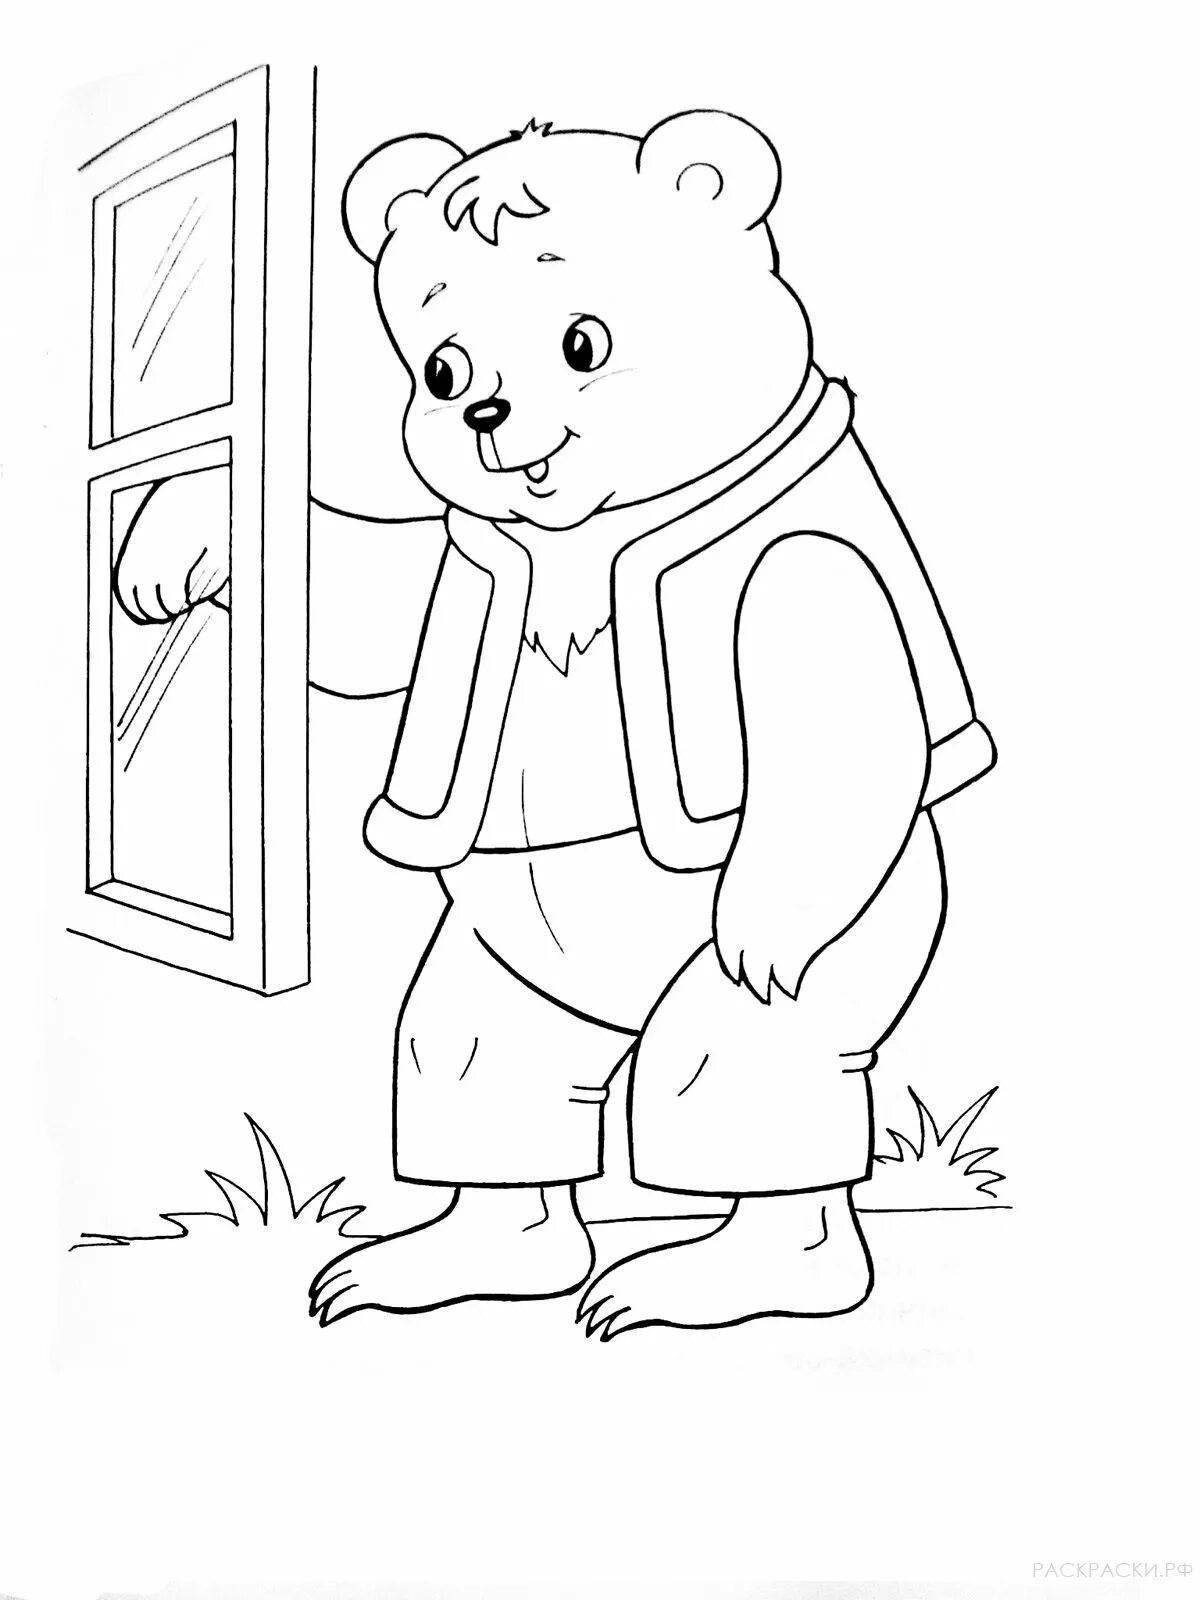 Three bears fun coloring book for kids